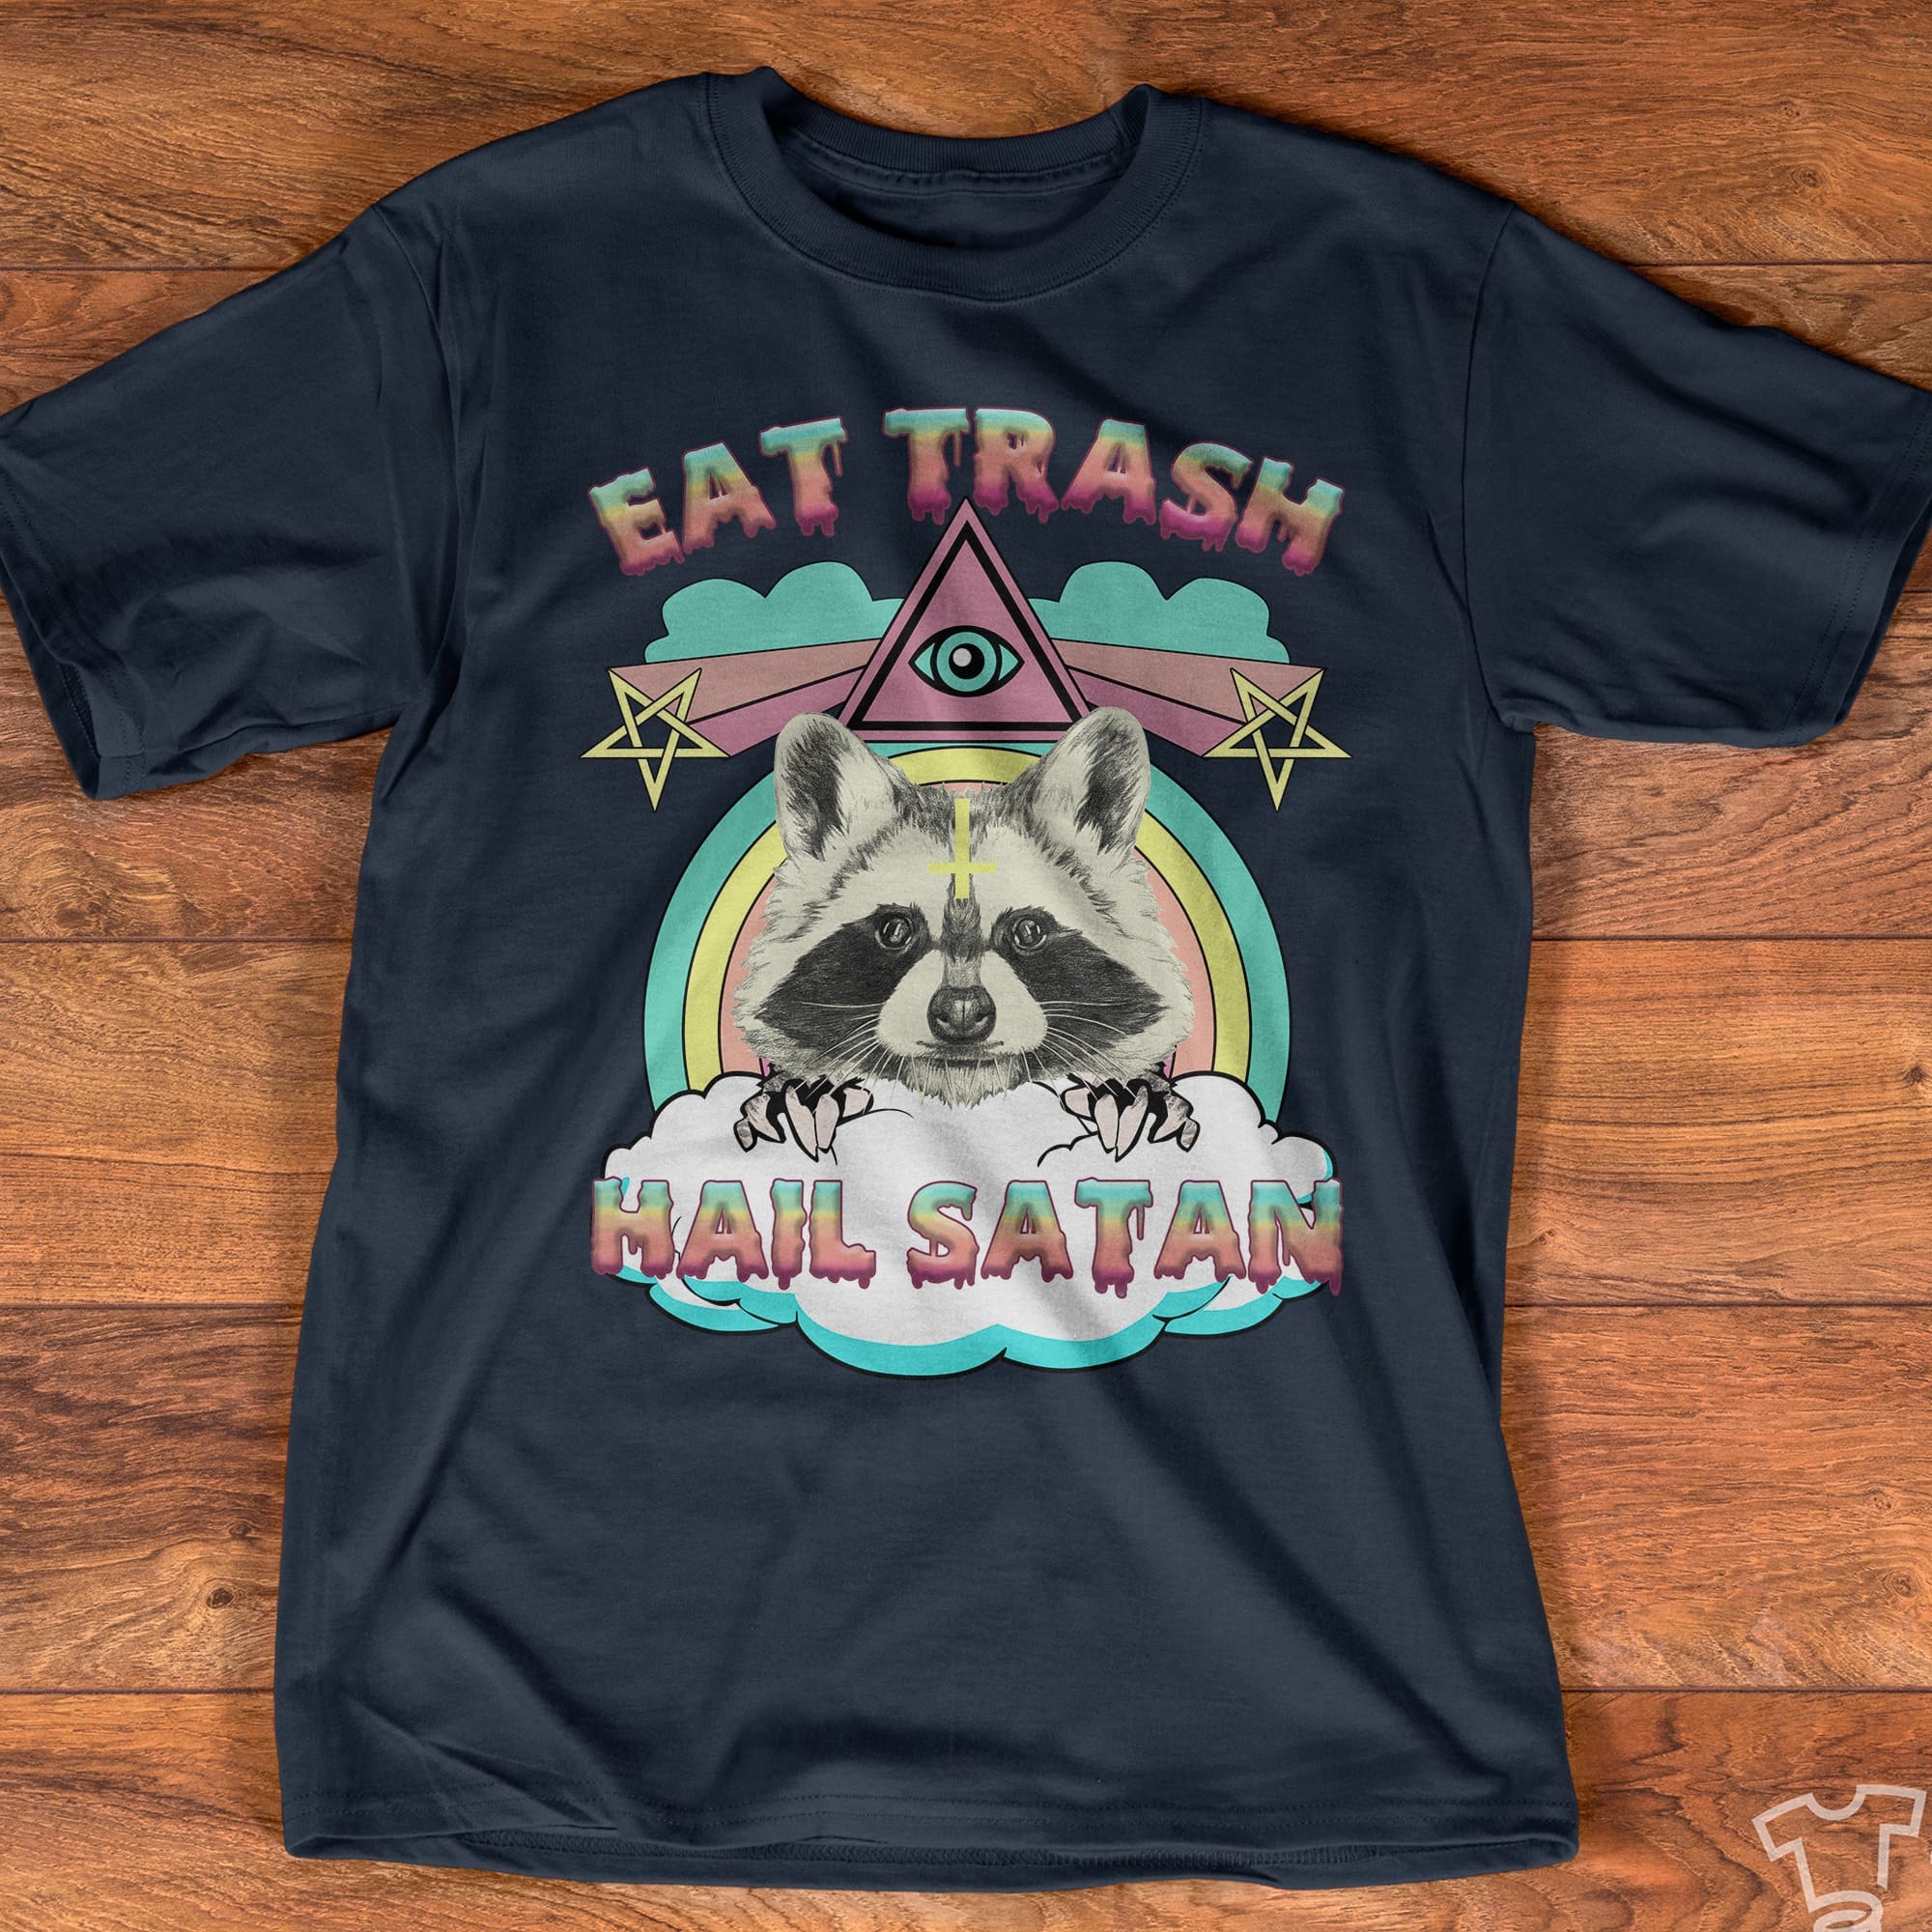 Eat trash, Hail Satan - Racoon and Satan, eat trash racoon